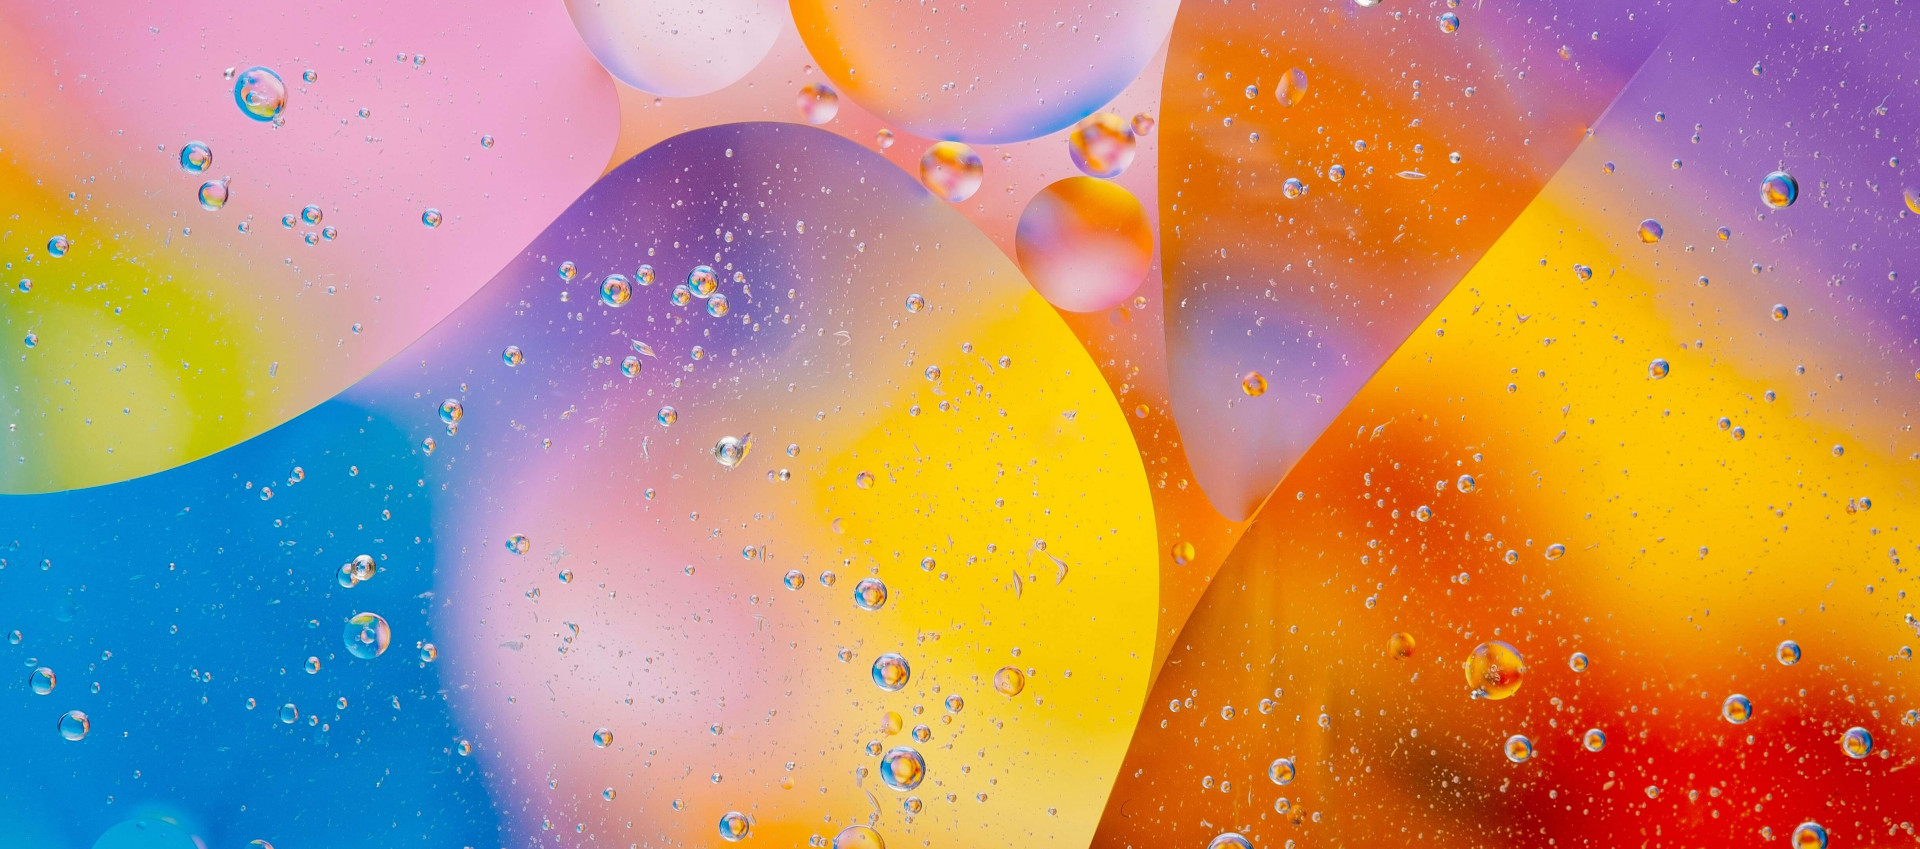 bubbles of watercolor oil